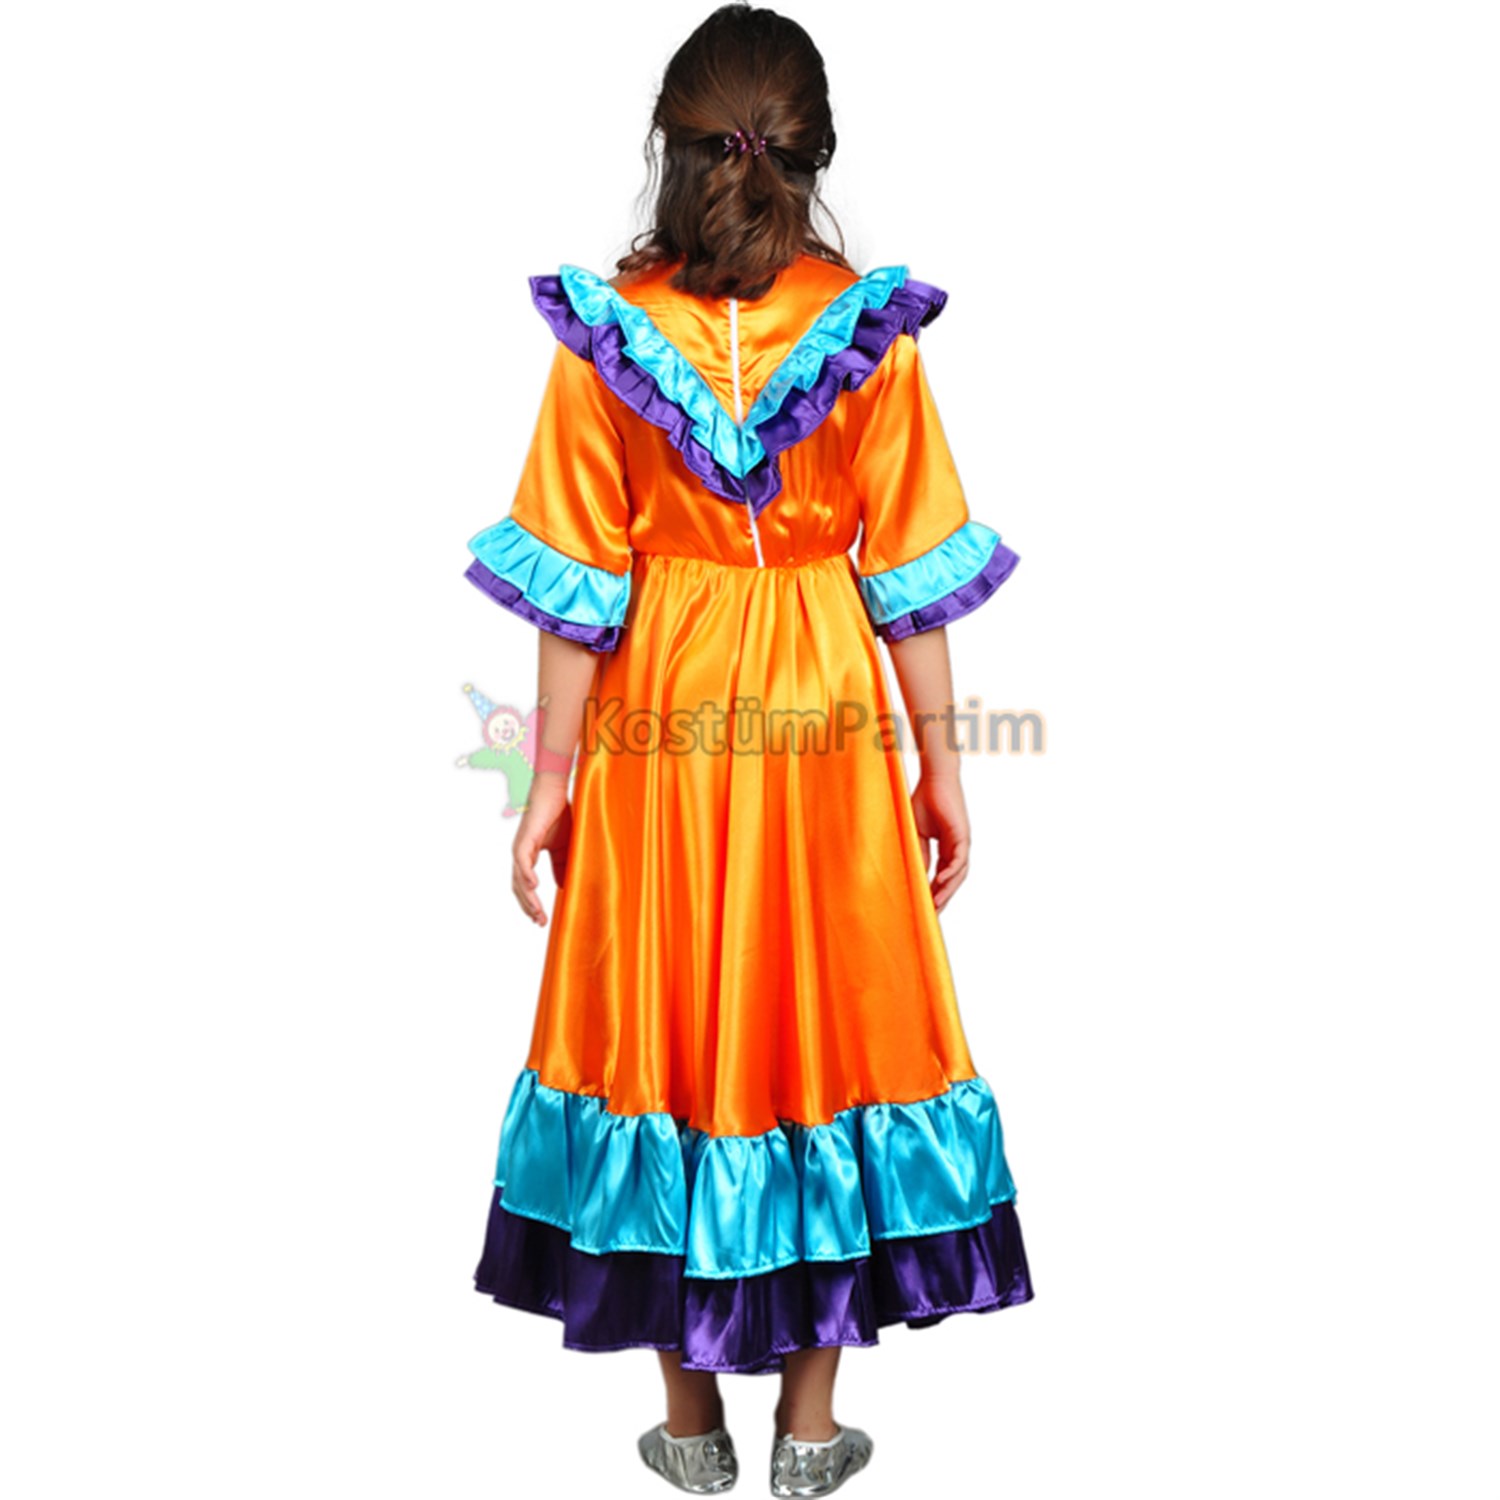 Meksika Kostümü Kız Çocuk - KostümPartim®